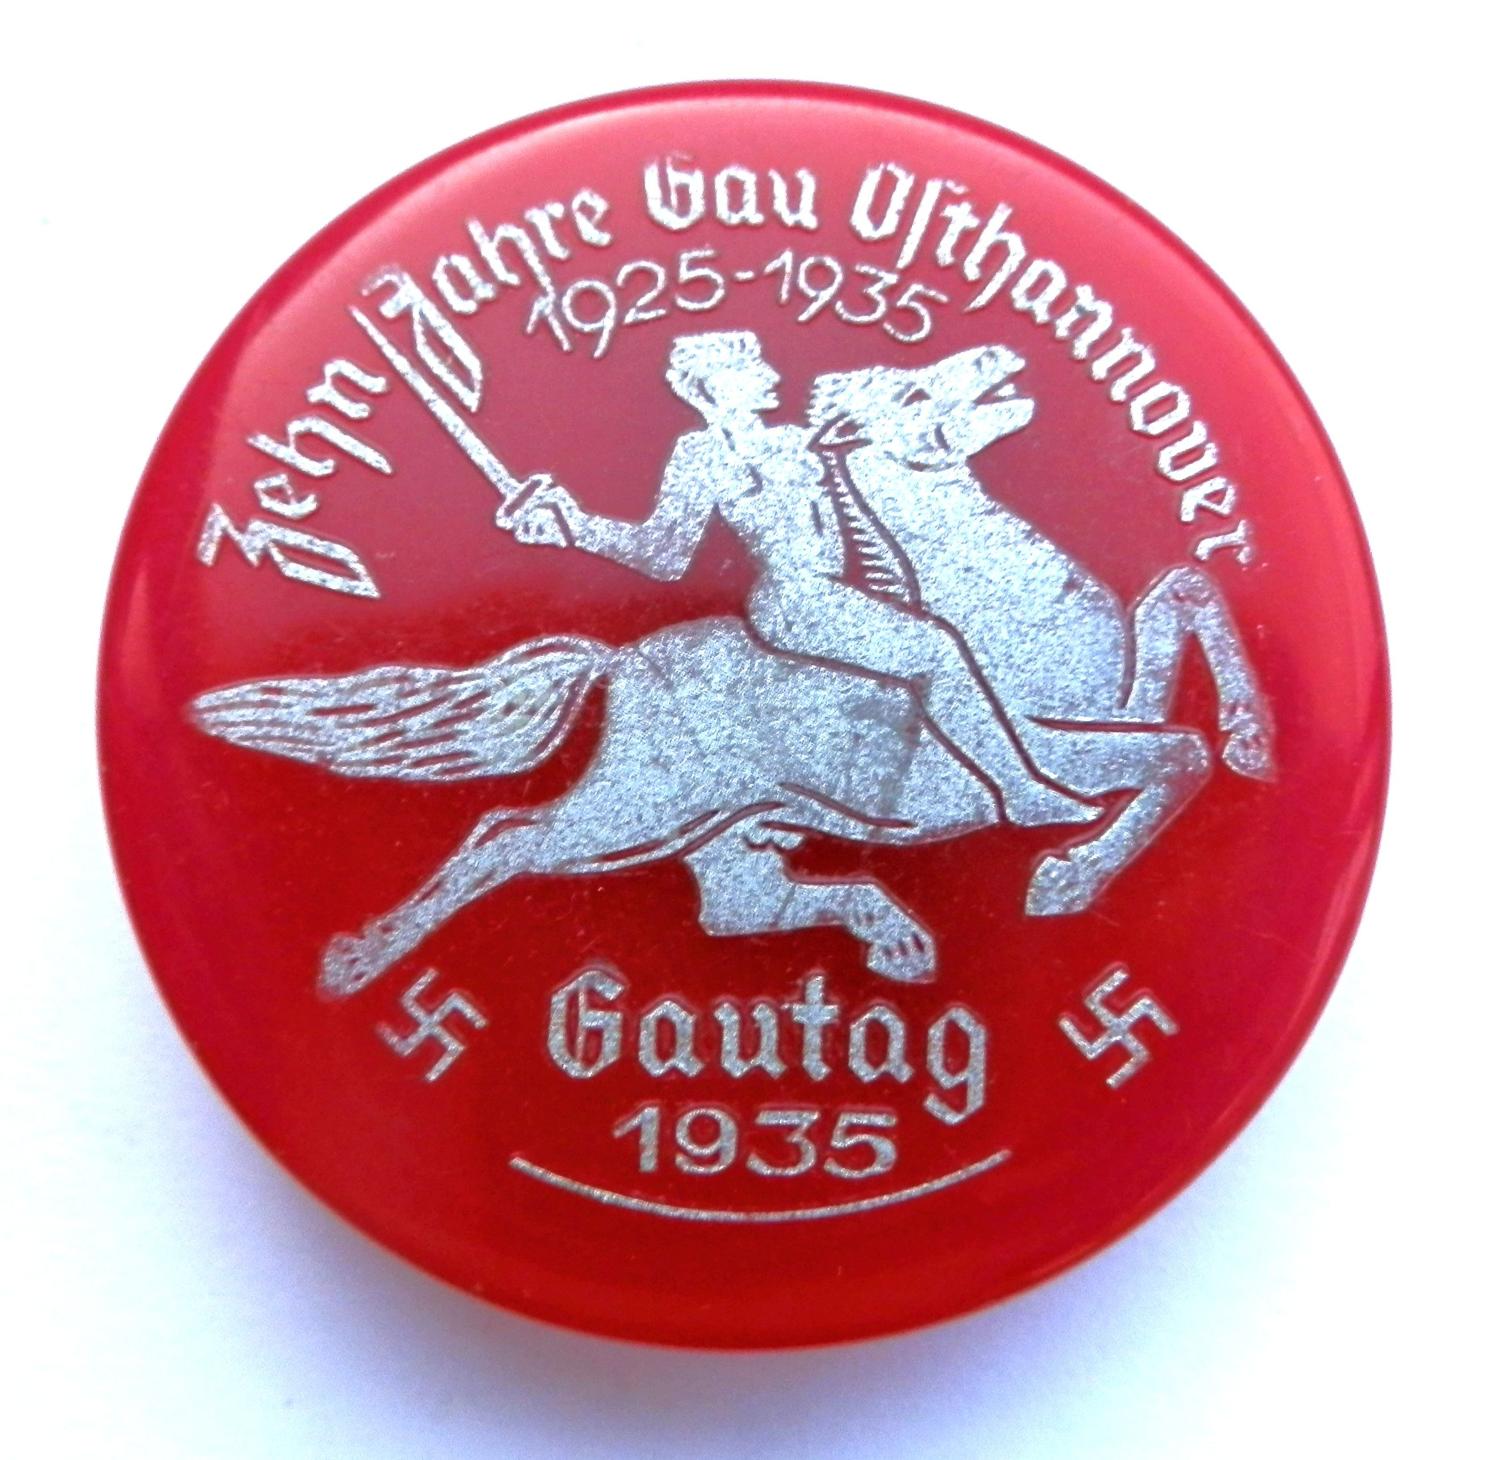 NSDAP 1935 GAUTAG Ost Hannover Day Badge.